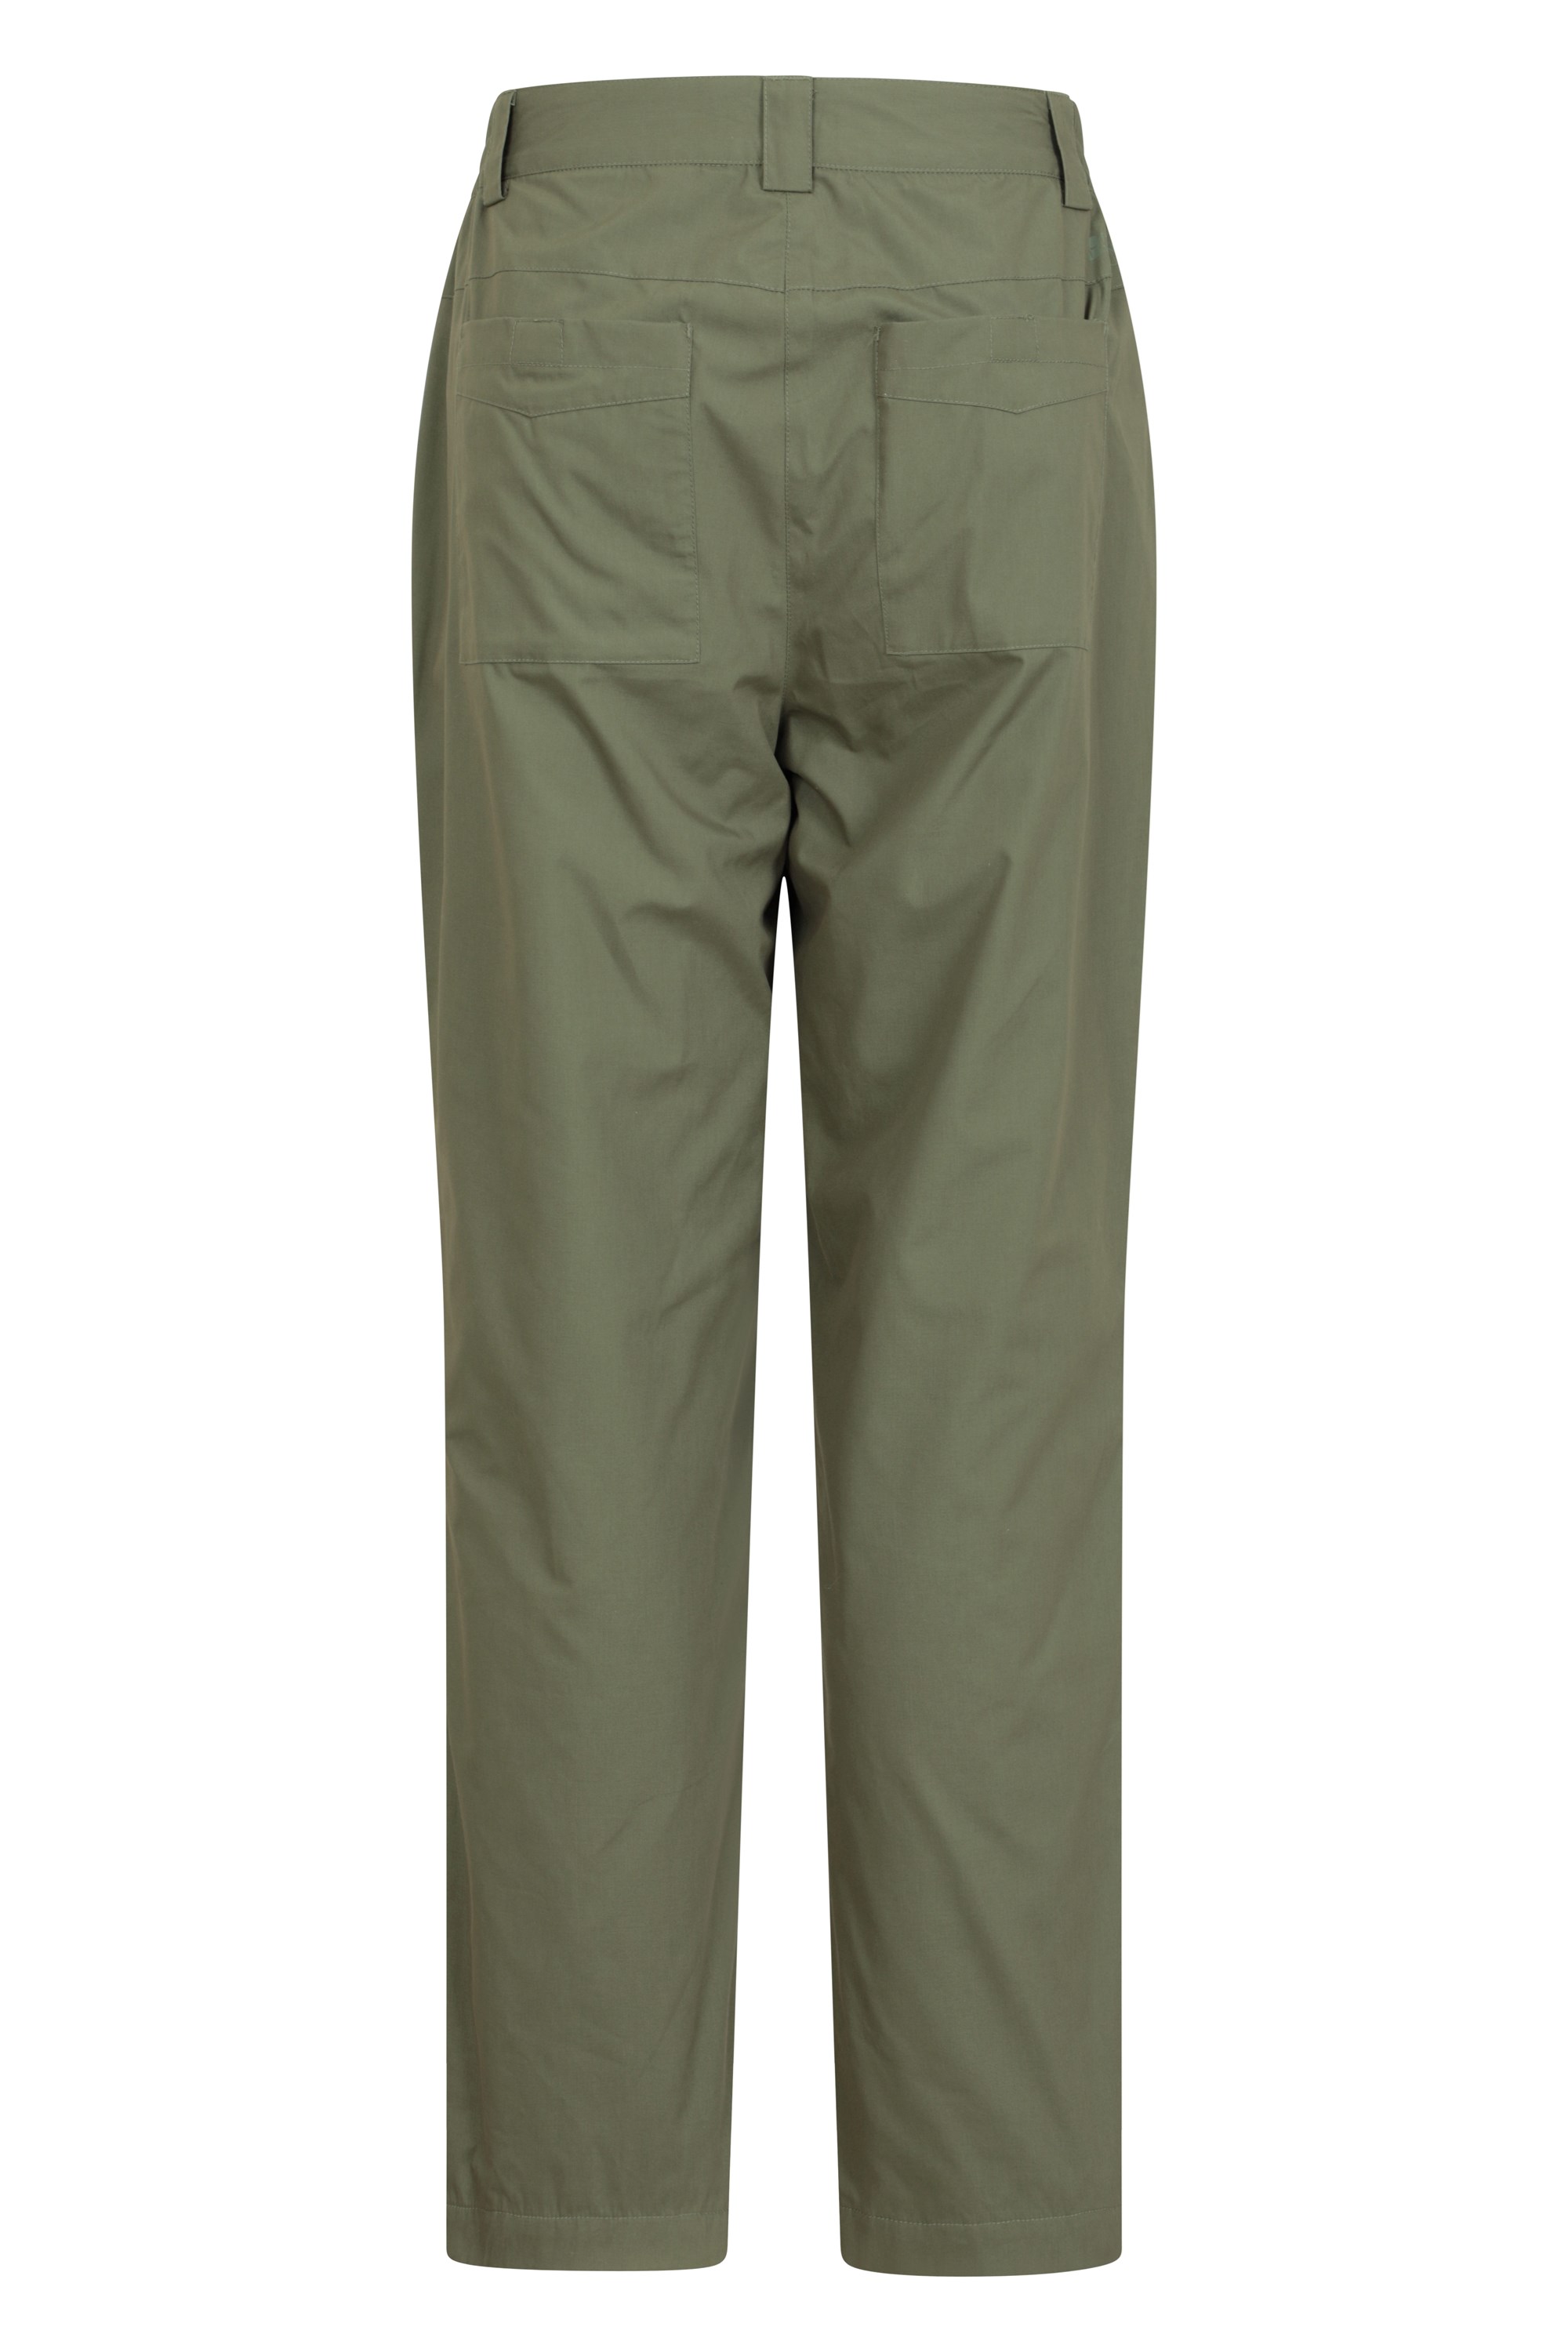 COMME des GARCONS HOMME DEUX Lining Check Cotton Pants (Trousers) Navy S |  PLAYFUL